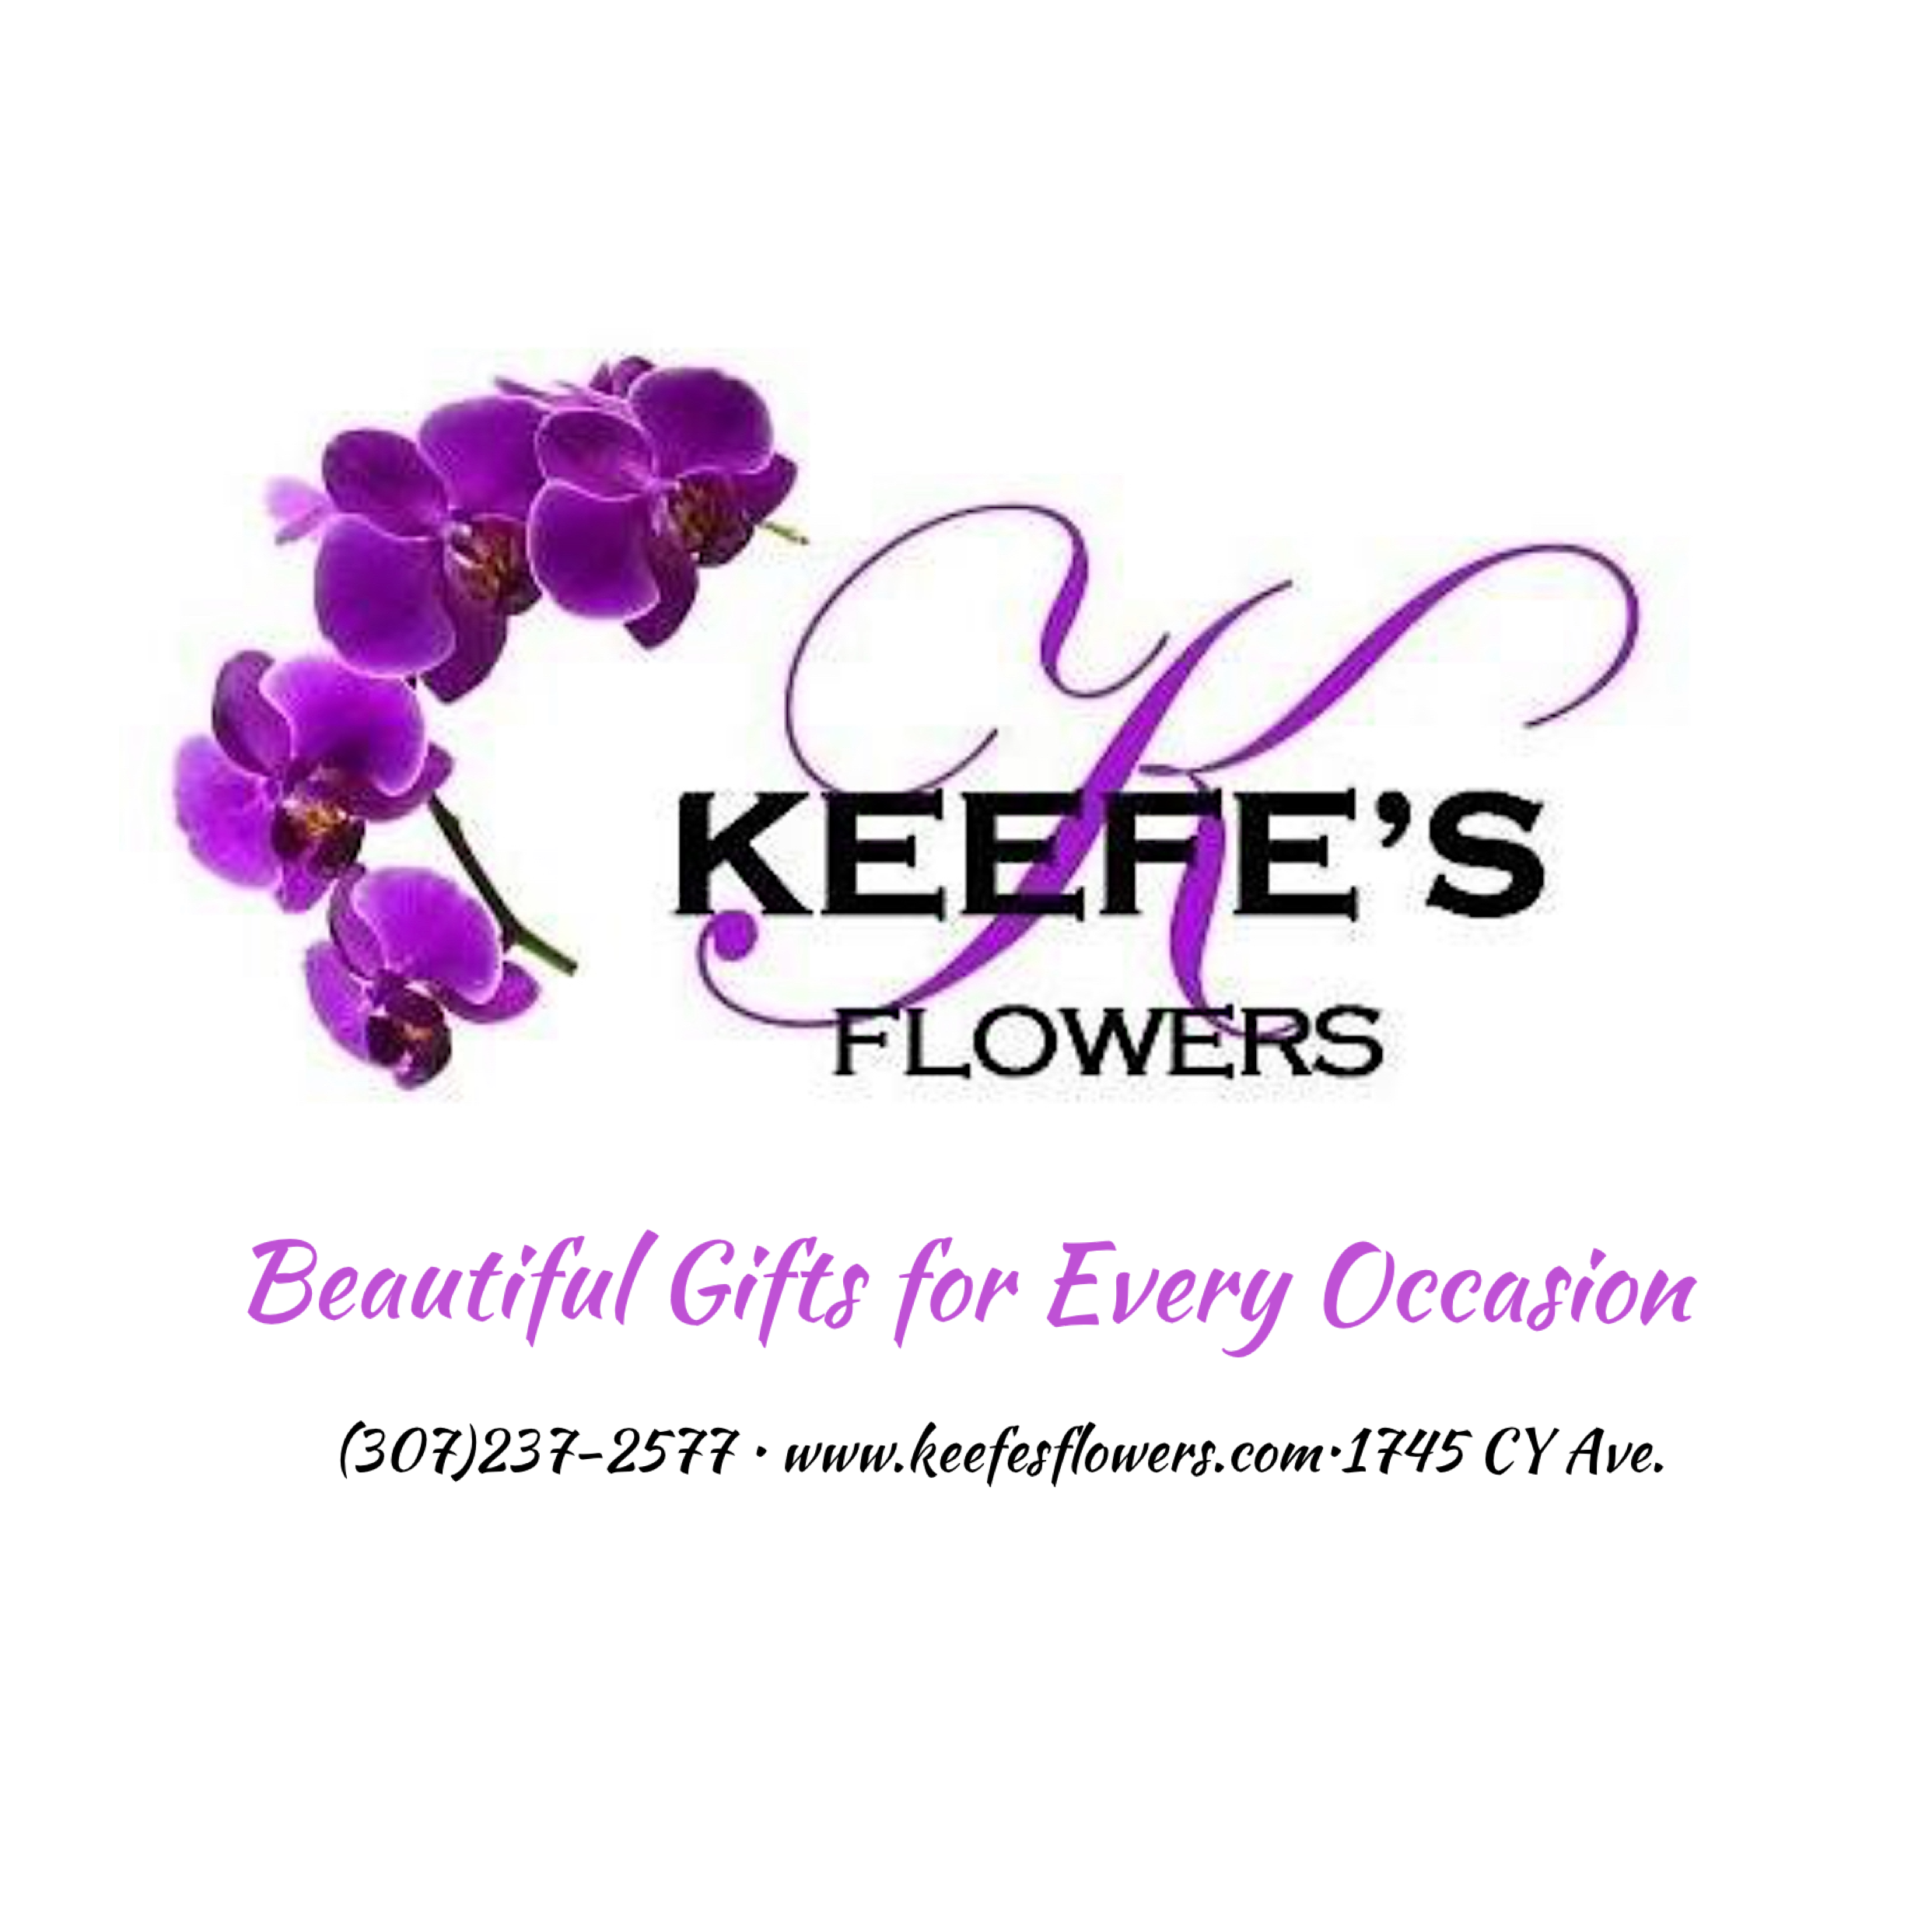 Keefe's Flowers